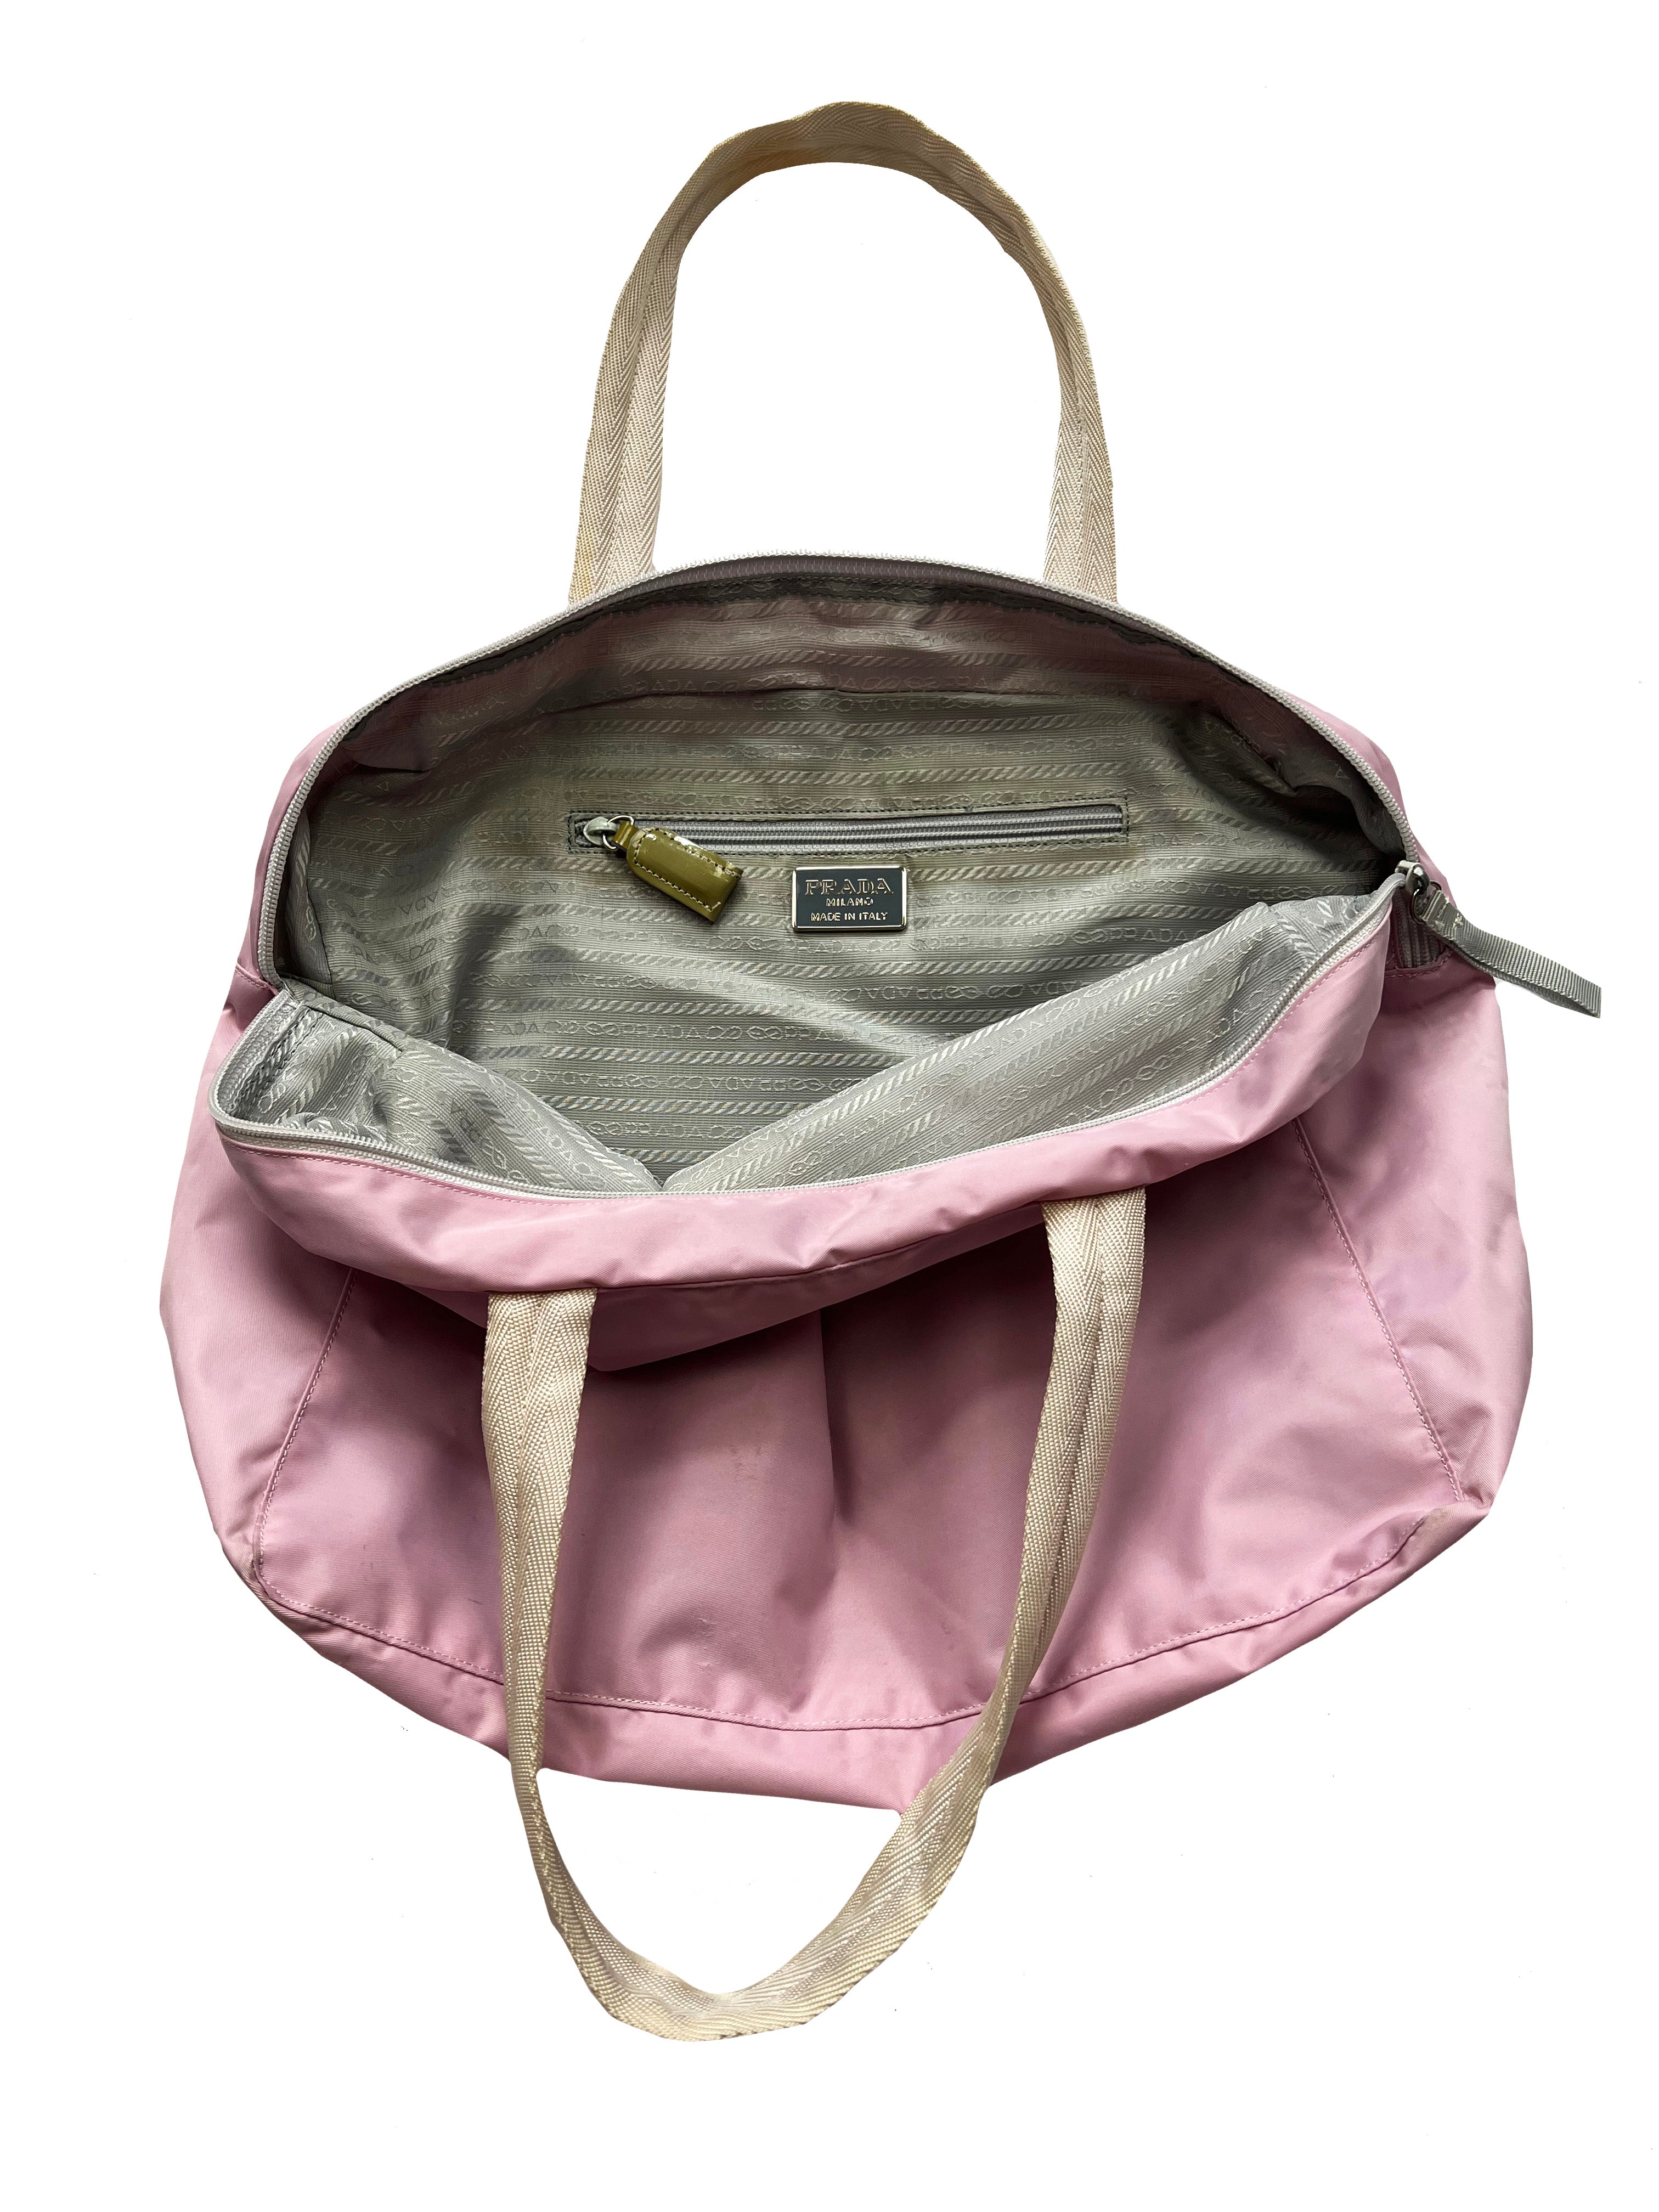 Prada Milano Baby Pink Handbag 2003